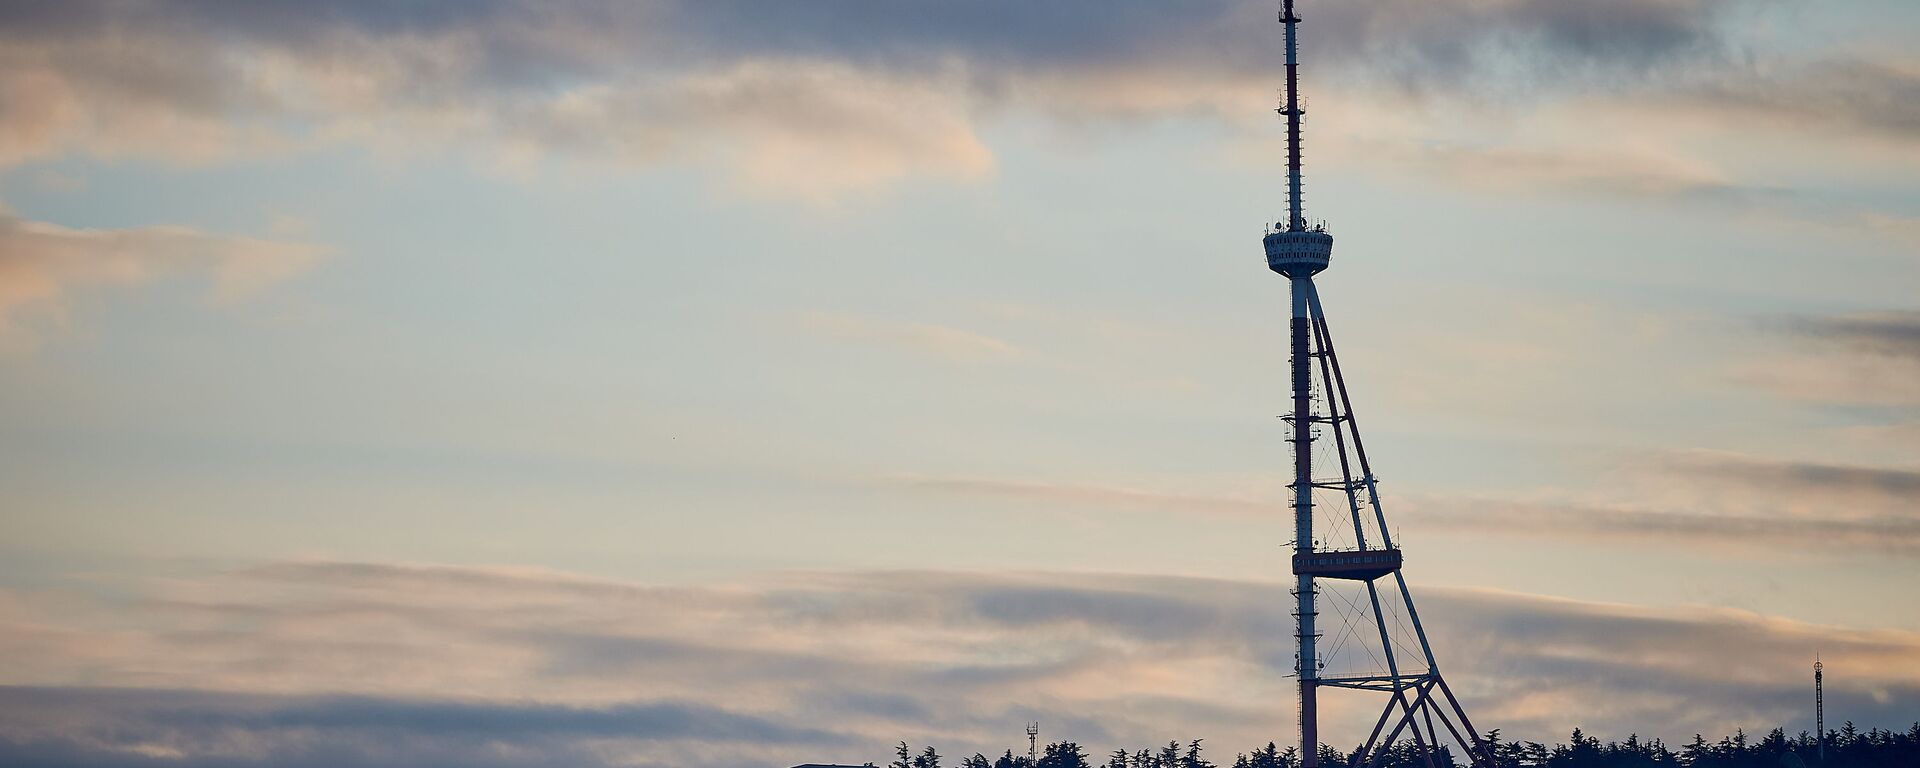 Вечернее небо над городом Тбилиси. Телевышка на горе Мтацминда - Sputnik Грузия, 1920, 03.01.2021